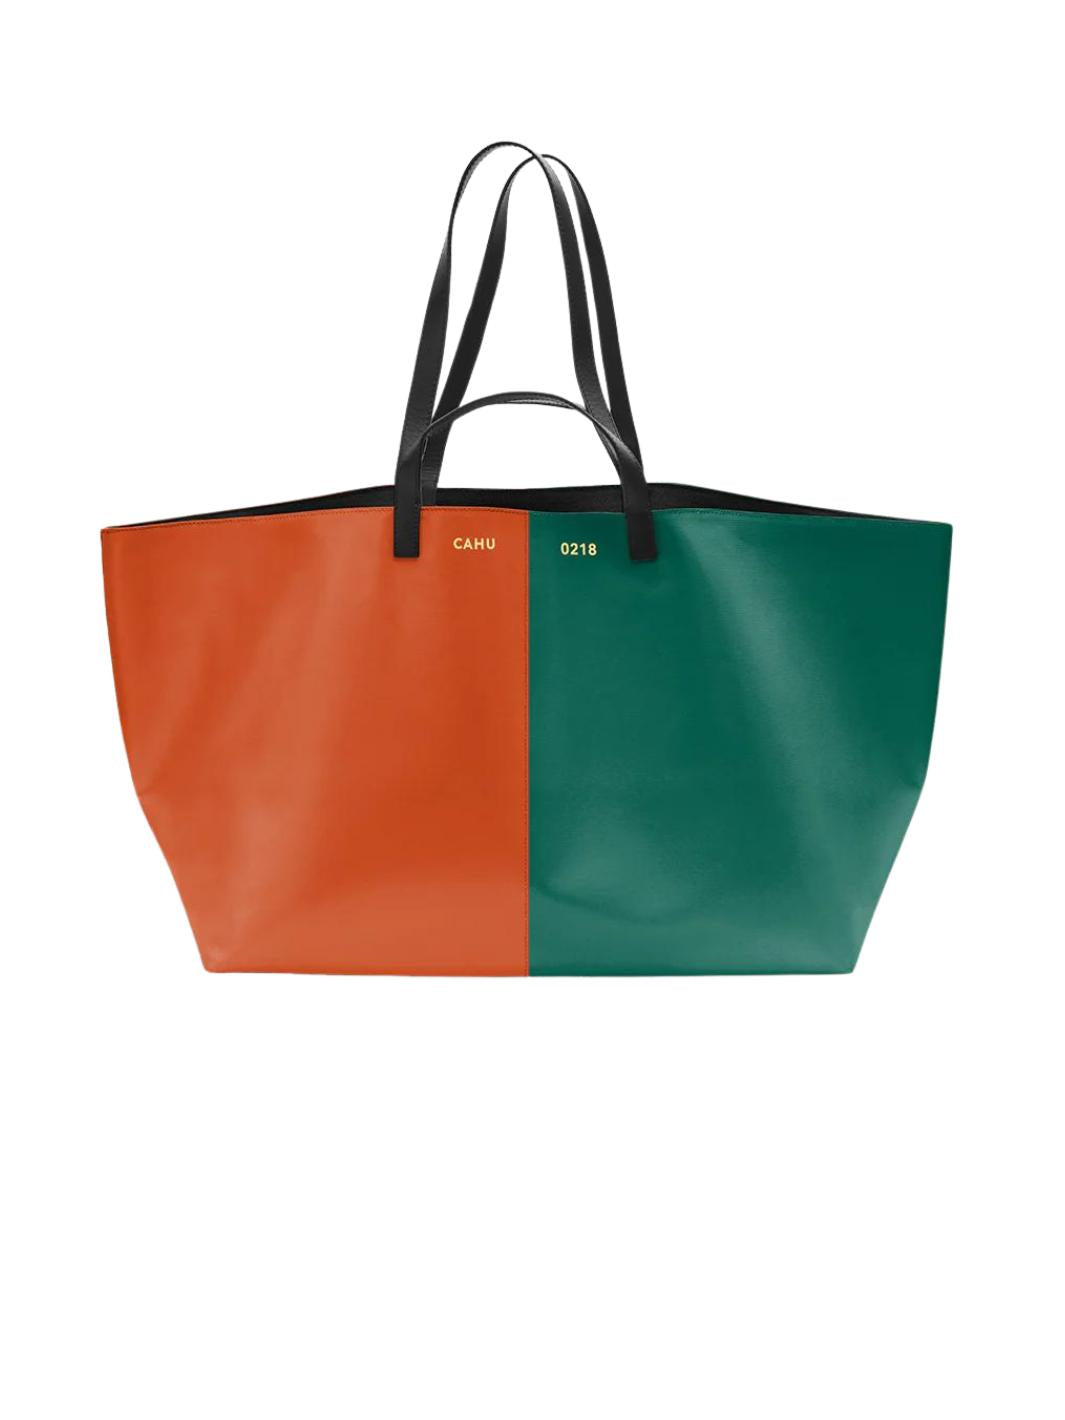 Cahu Bags Tote Bag | Pratique Medium Military Green/Orange